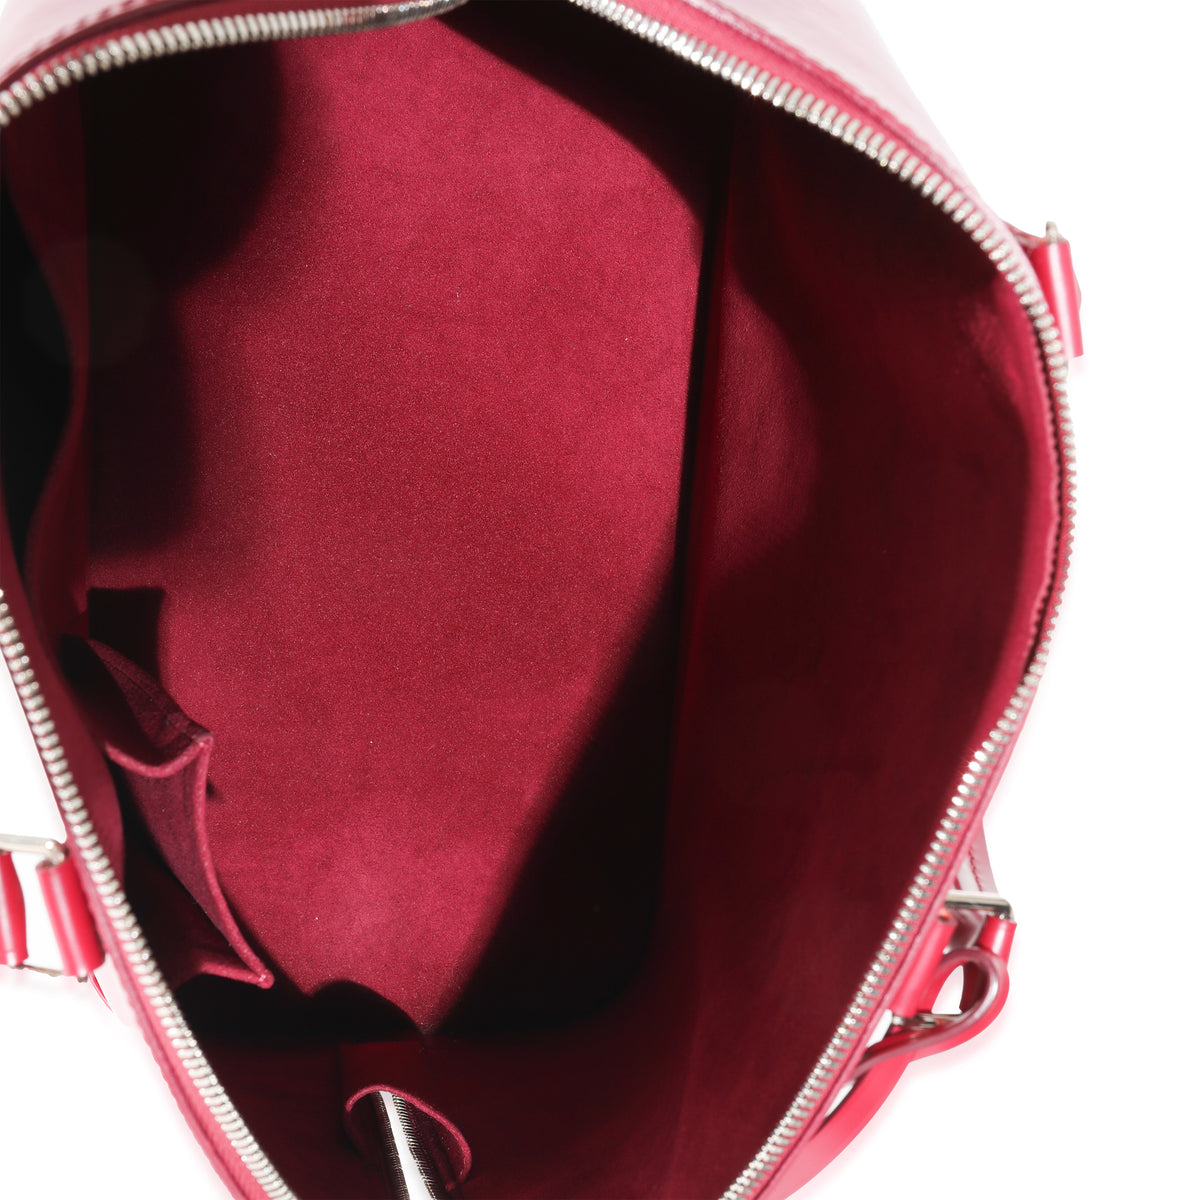 Louis Vuitton Red Epi Leather Speedy 25, myGemma, QA